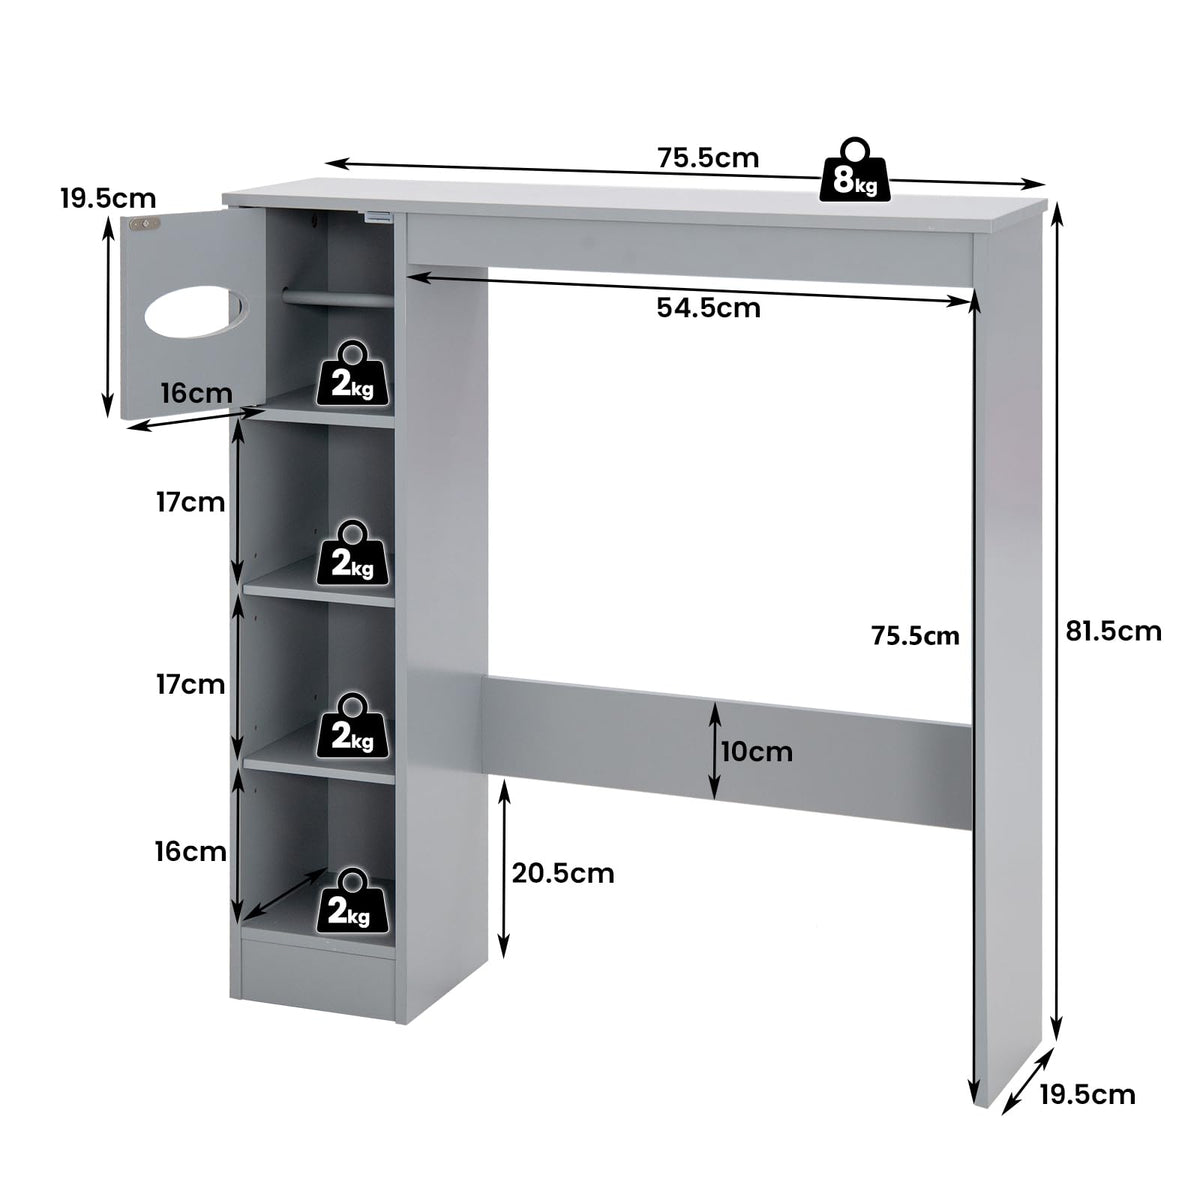 Giantex Over The Toilet Storage Cabinet w/Adjustable Shelves & Toilet Paper Holder